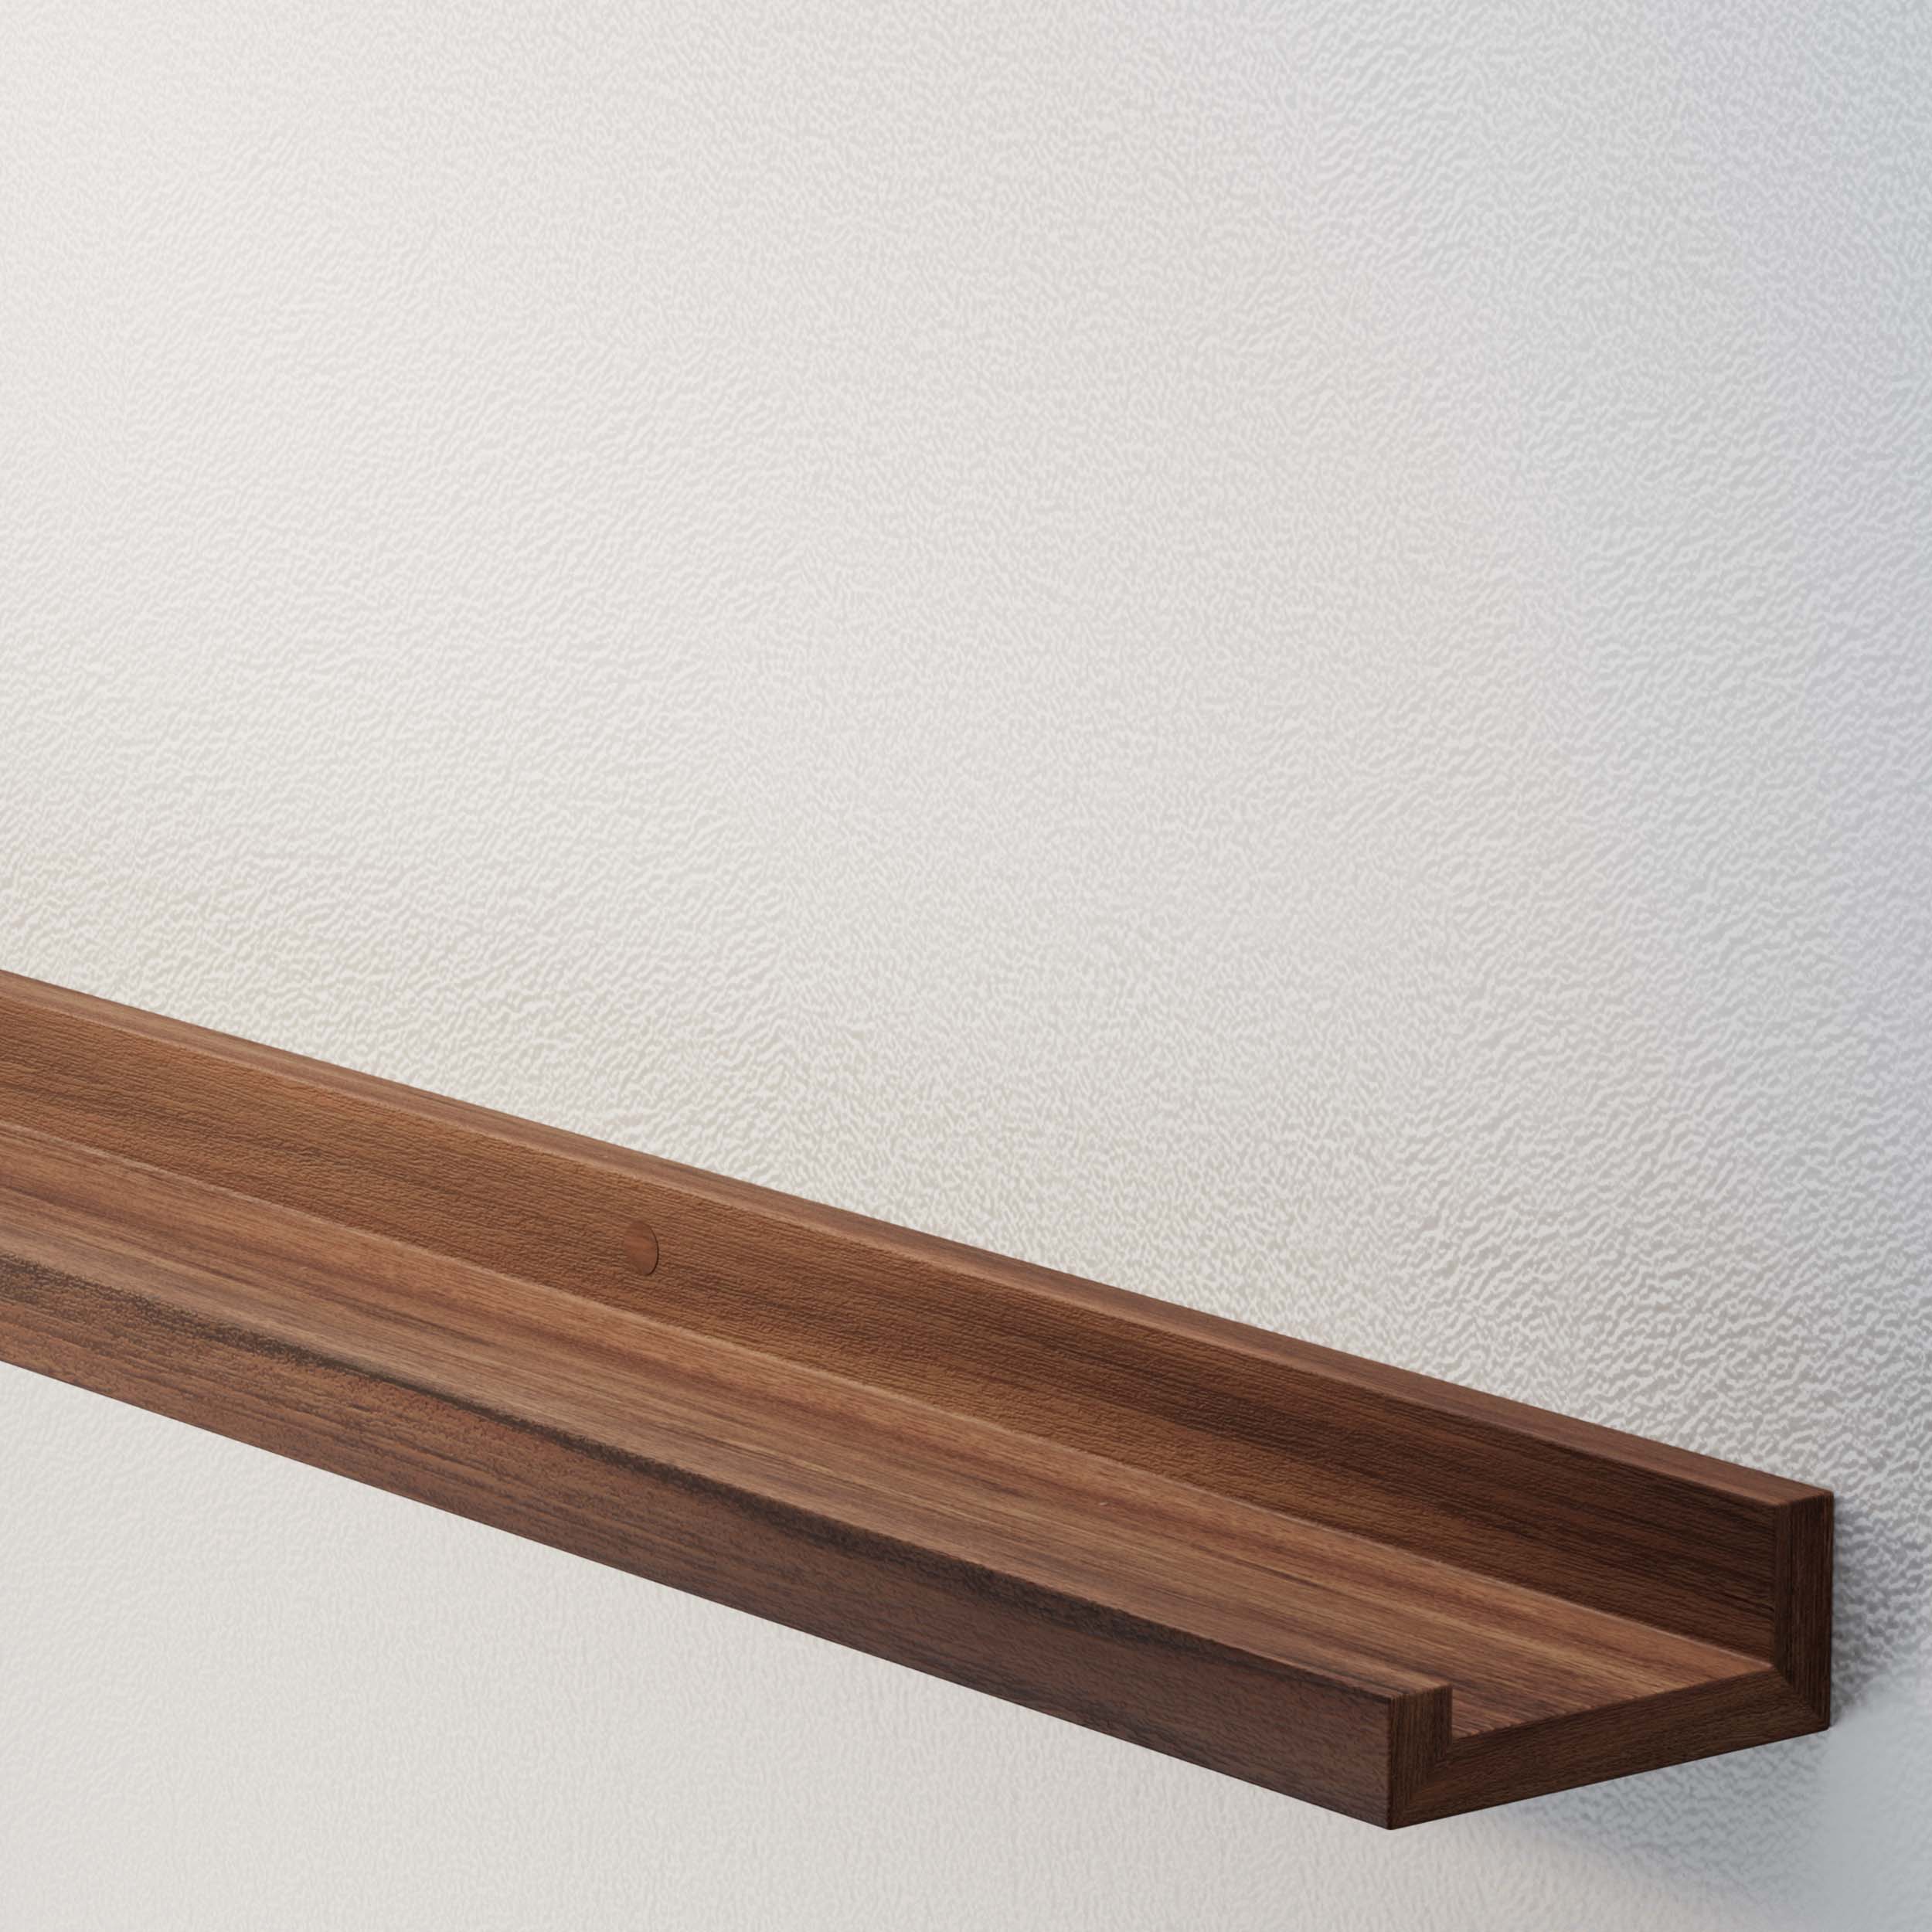 An empty walnut wall shelf against a textured wall, highlighting the shelf's sleek design and wood grain finish.